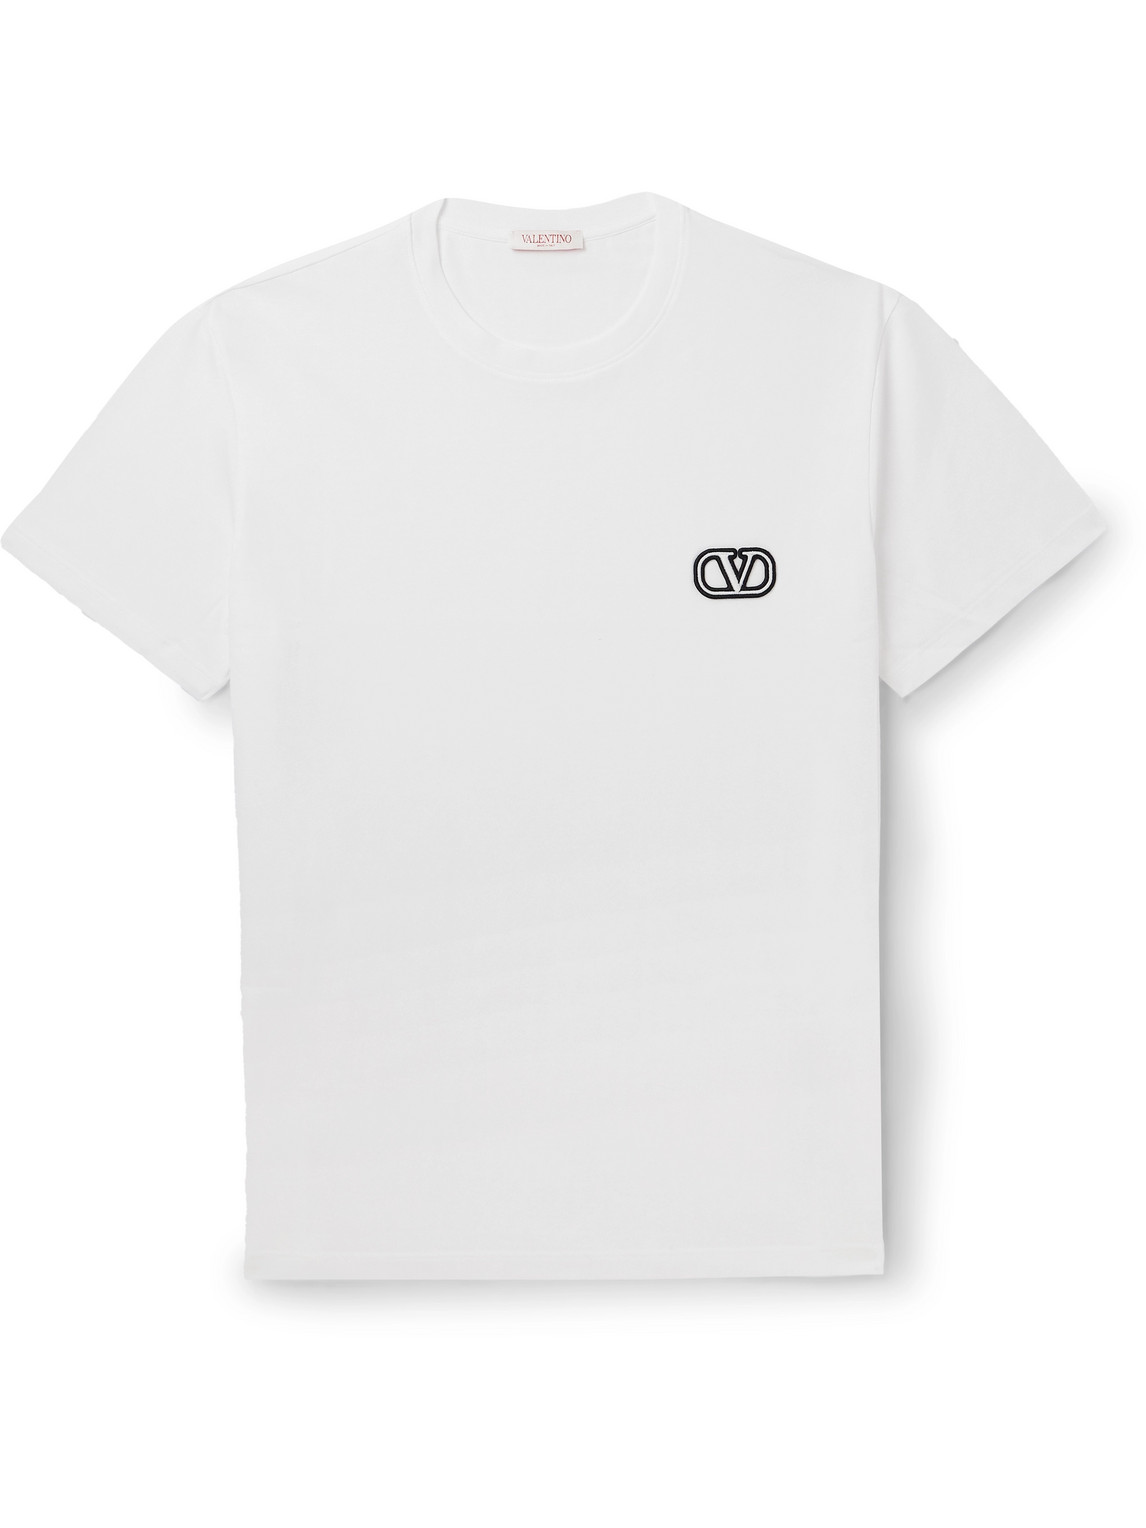 Valentino Garavani - Logo-Appliquéd Cotton-Jersey T-Shirt - Men - White - L von Valentino Garavani